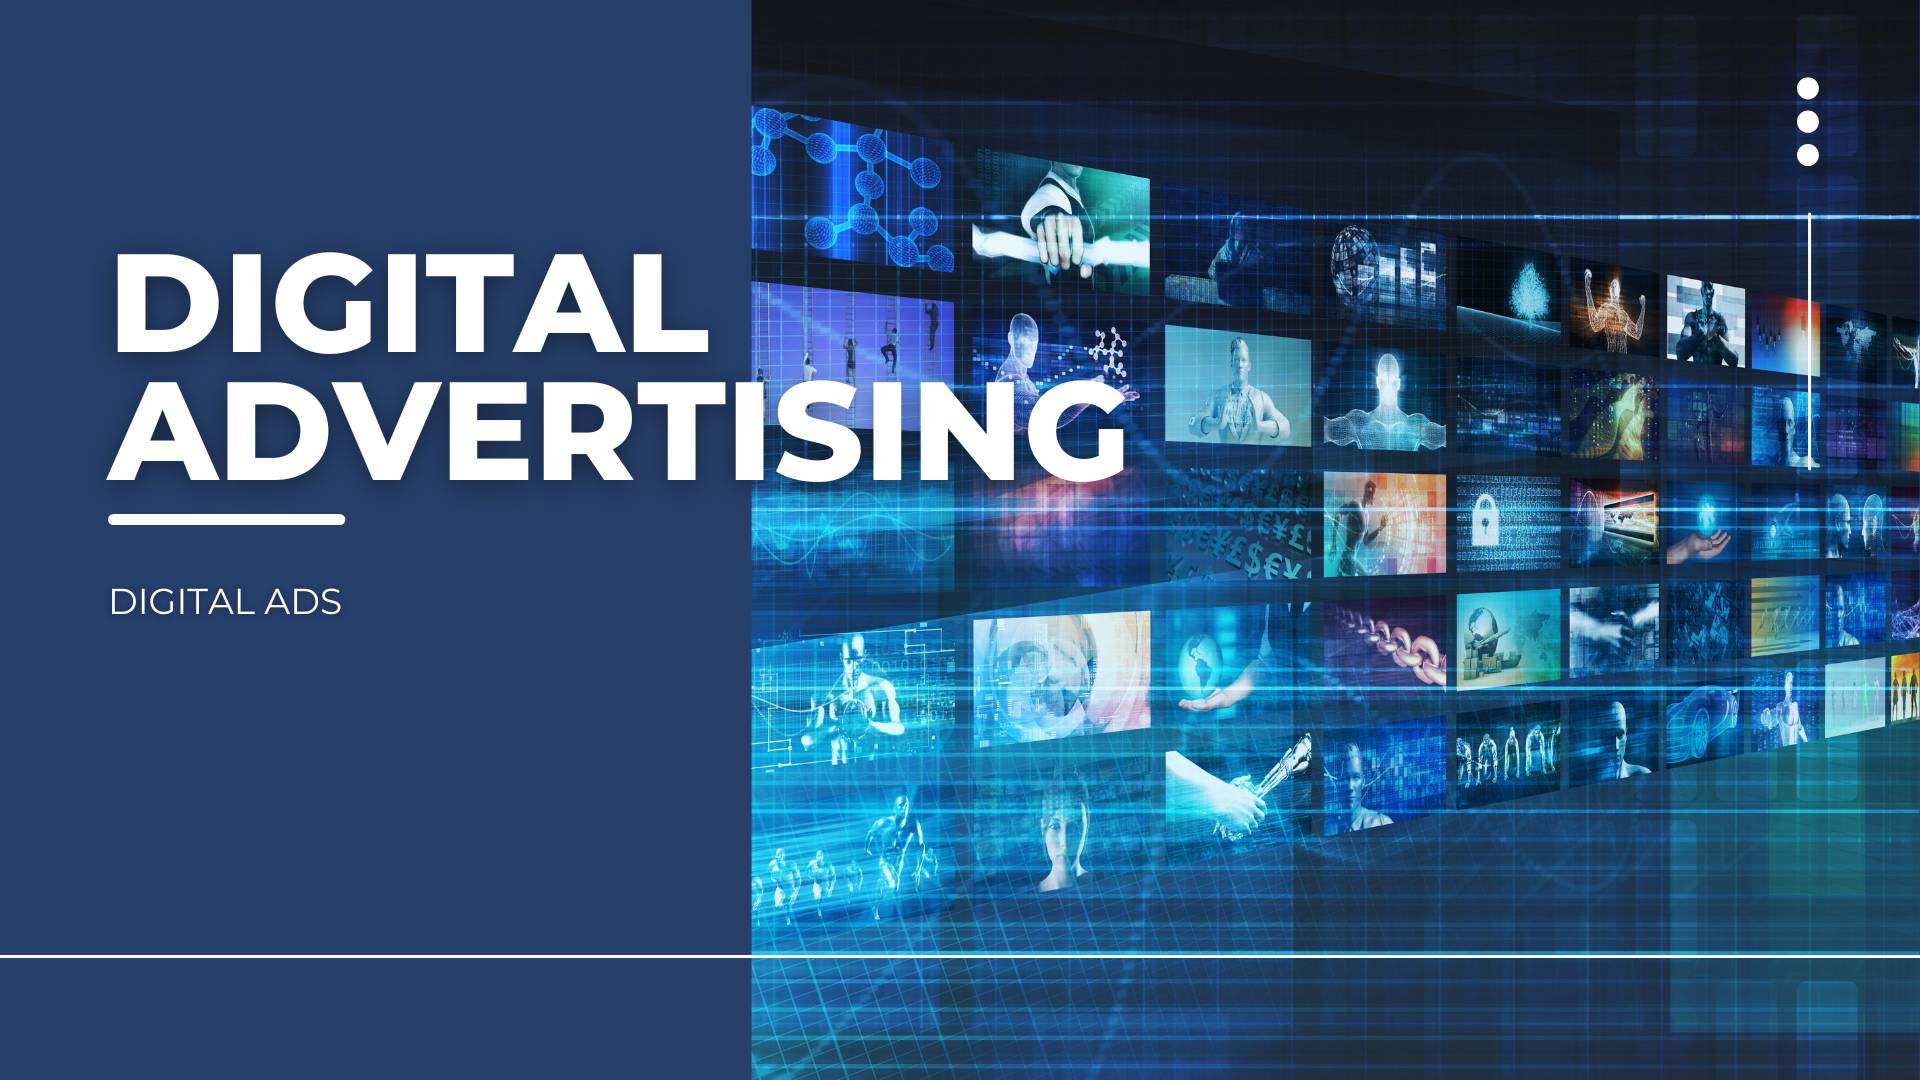 digital advertising and digital ads